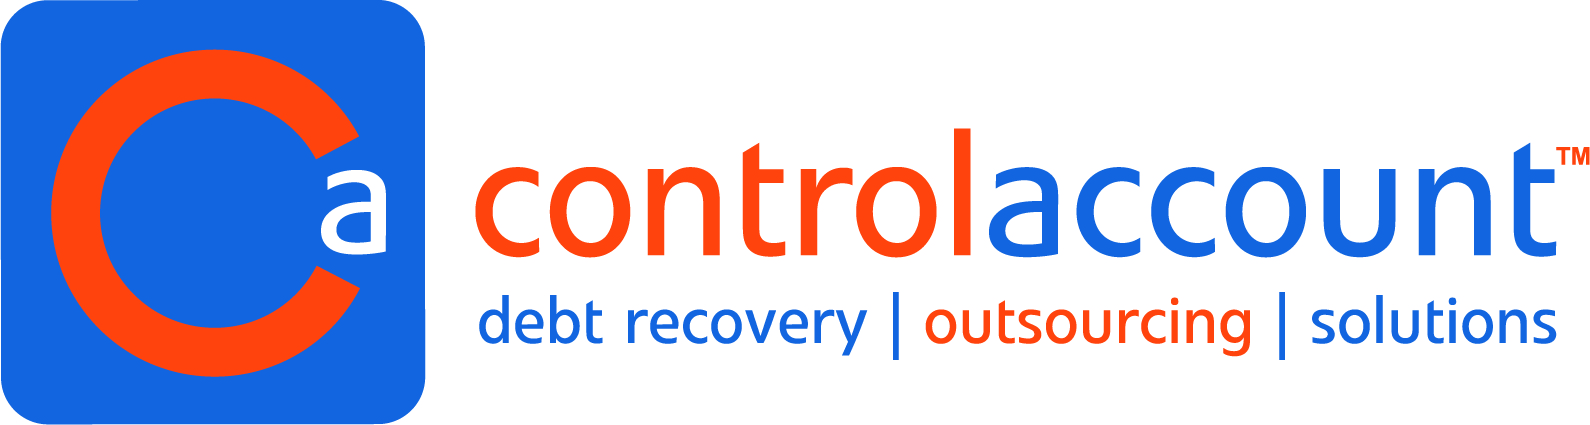 Controlaccount Ltd company